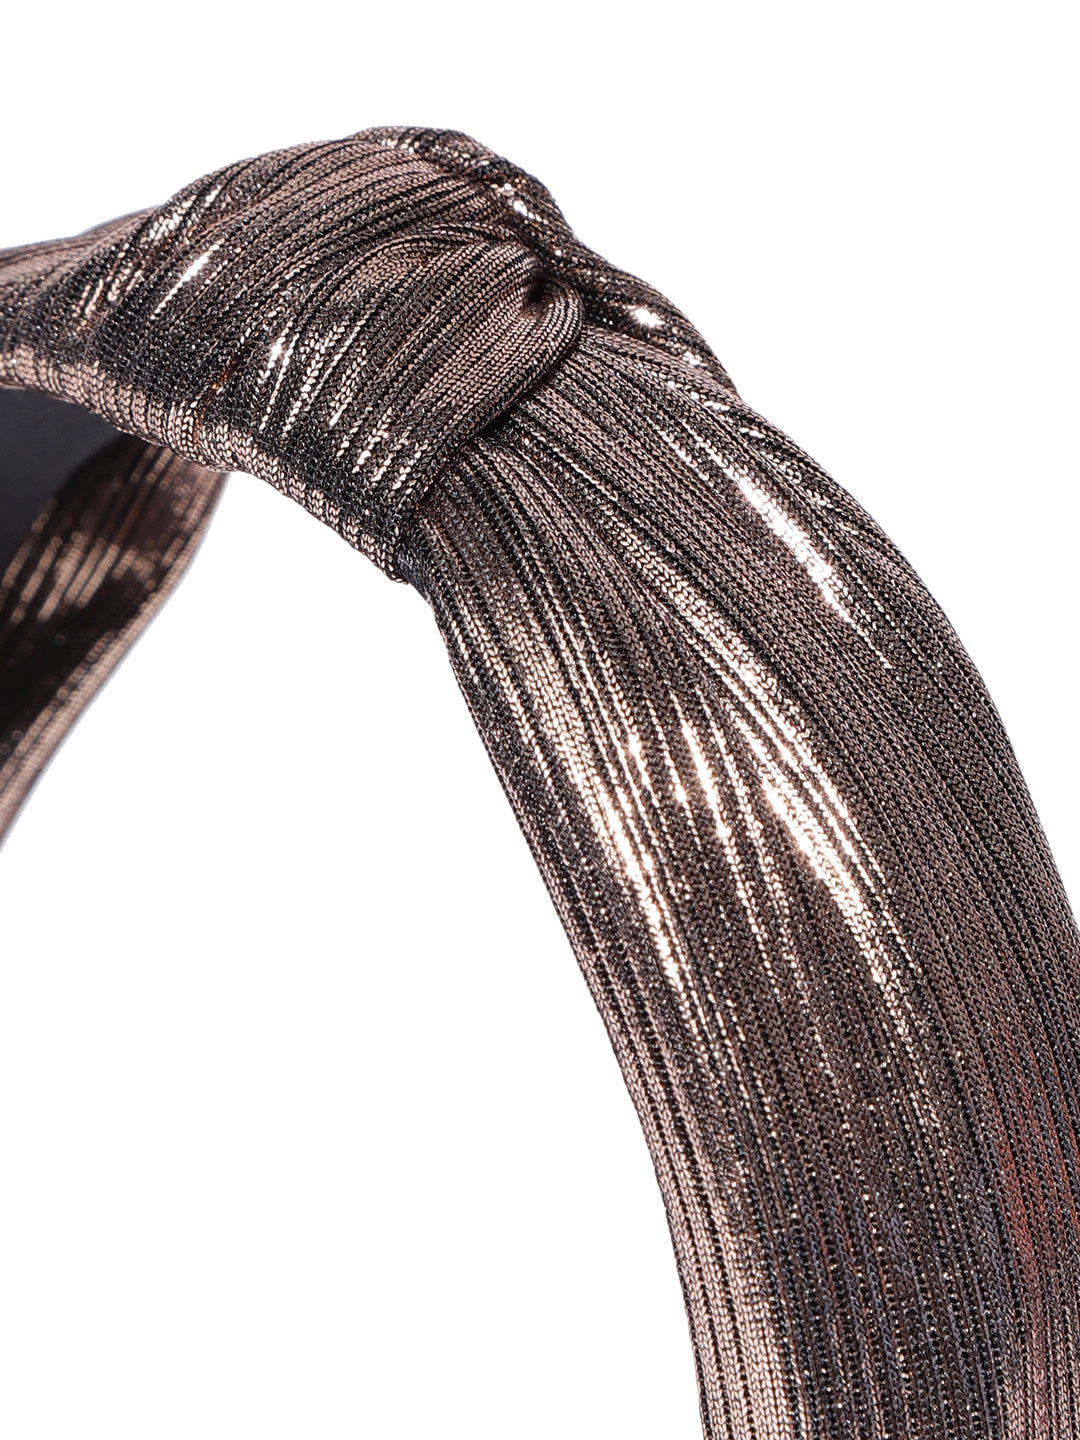 Shiny Finish Cross Knot Design Tortilla Brown Hairband